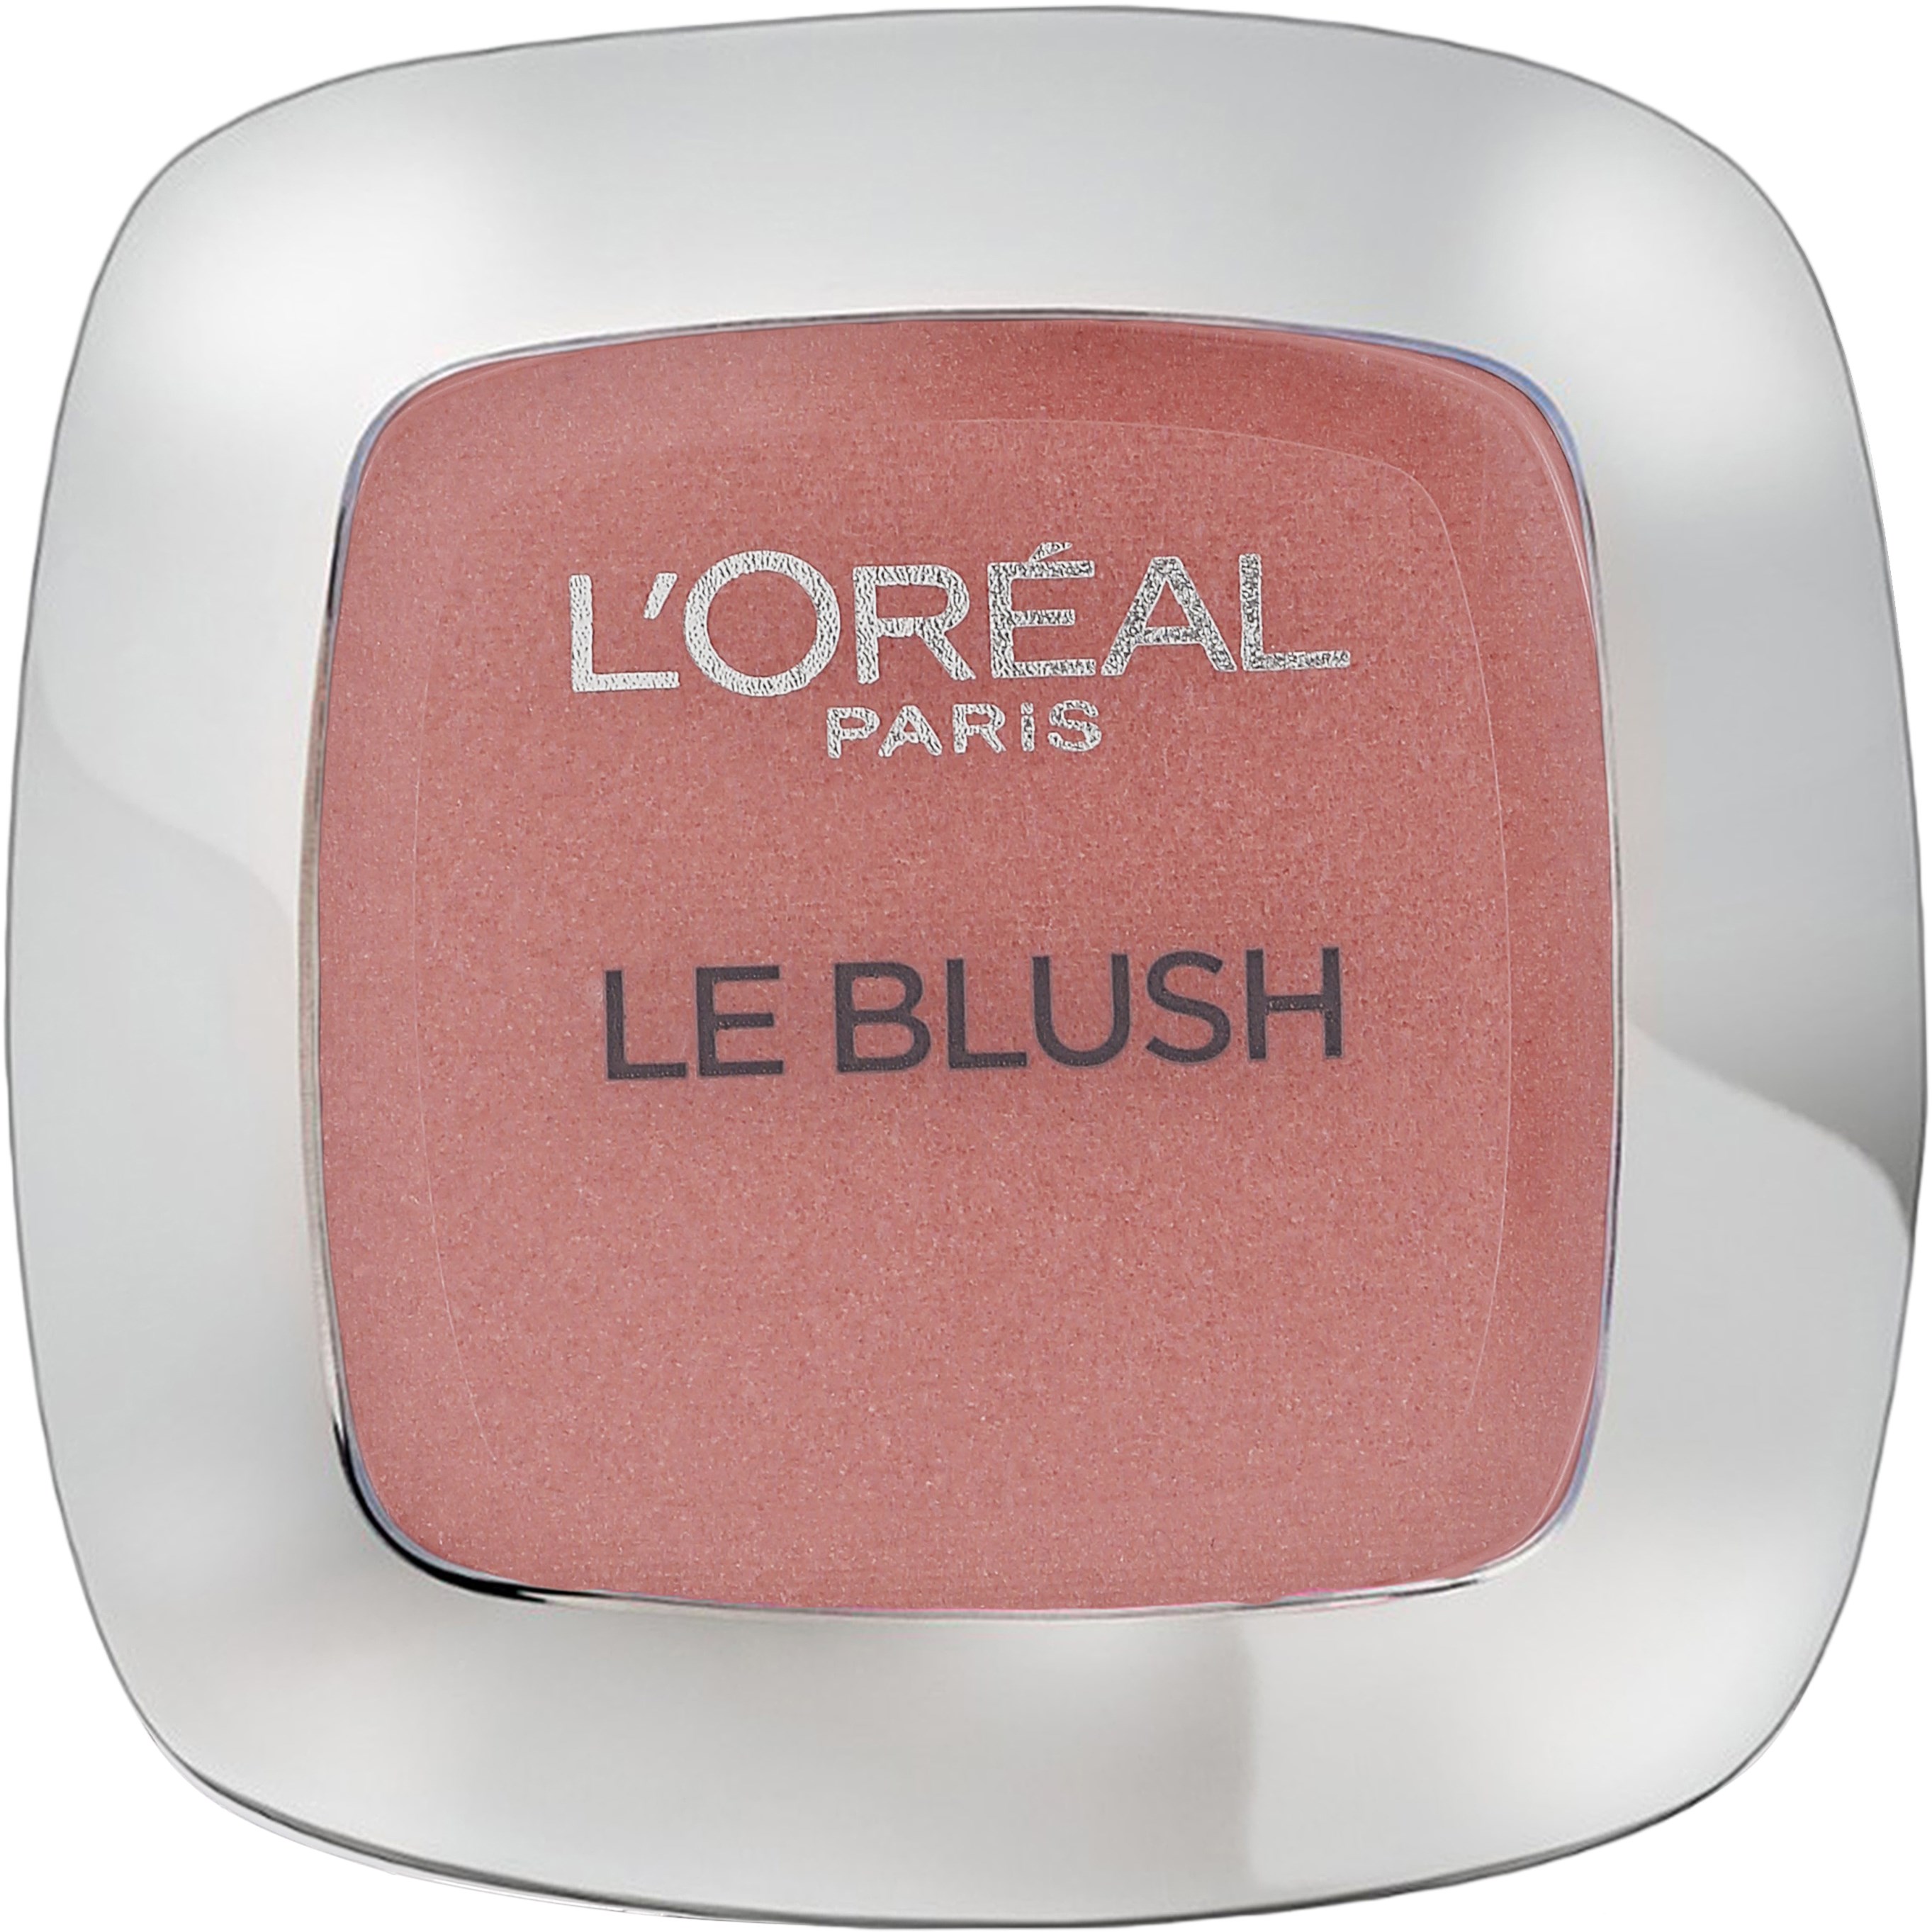 Loreal True Match Le Blush - 120 Sandalwood Pink